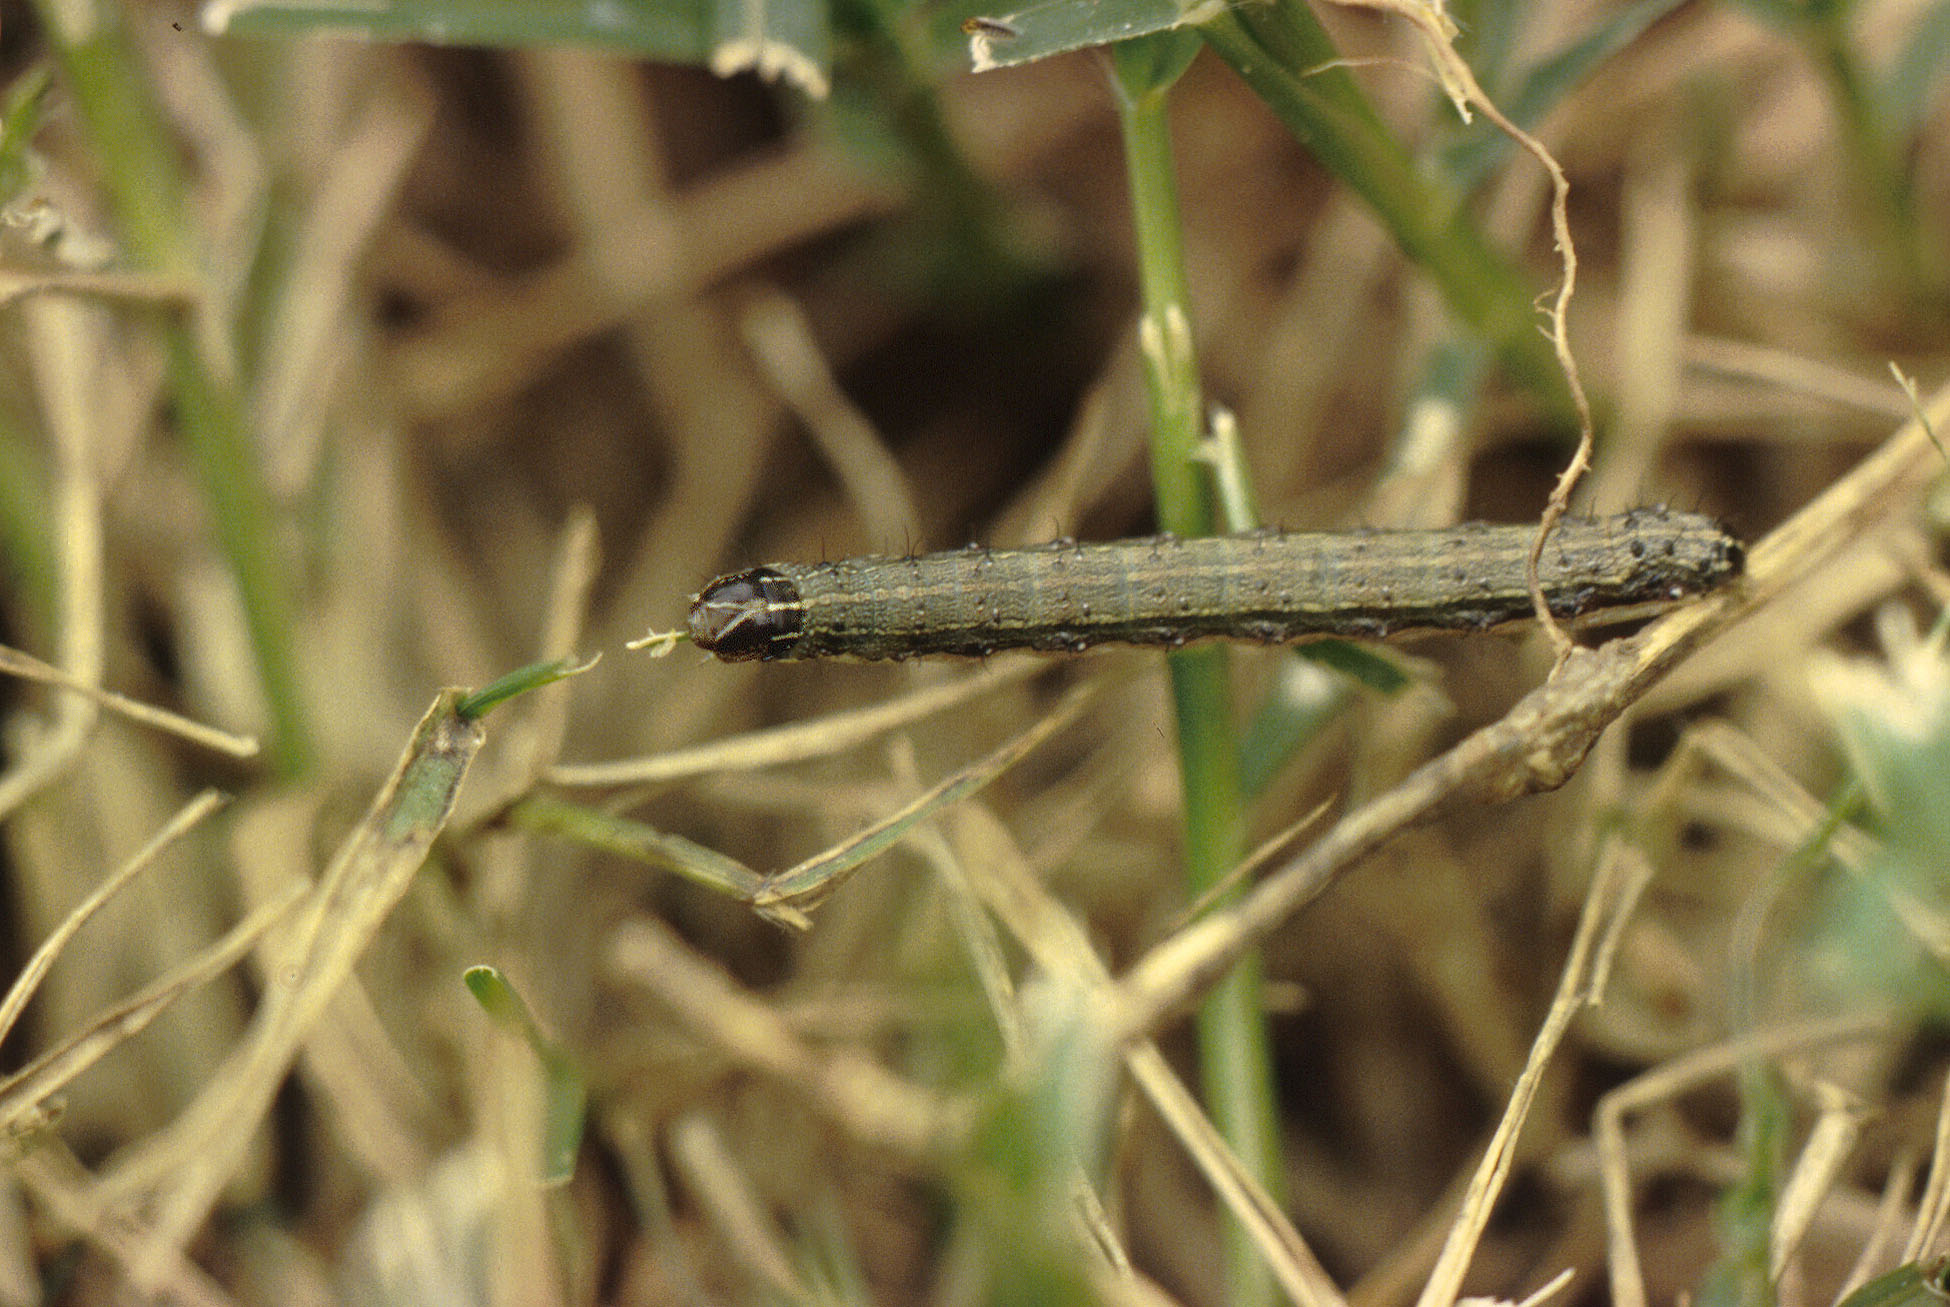 Fall armyworm on bermudagrass, Texas A&M AgriLife Extension photo